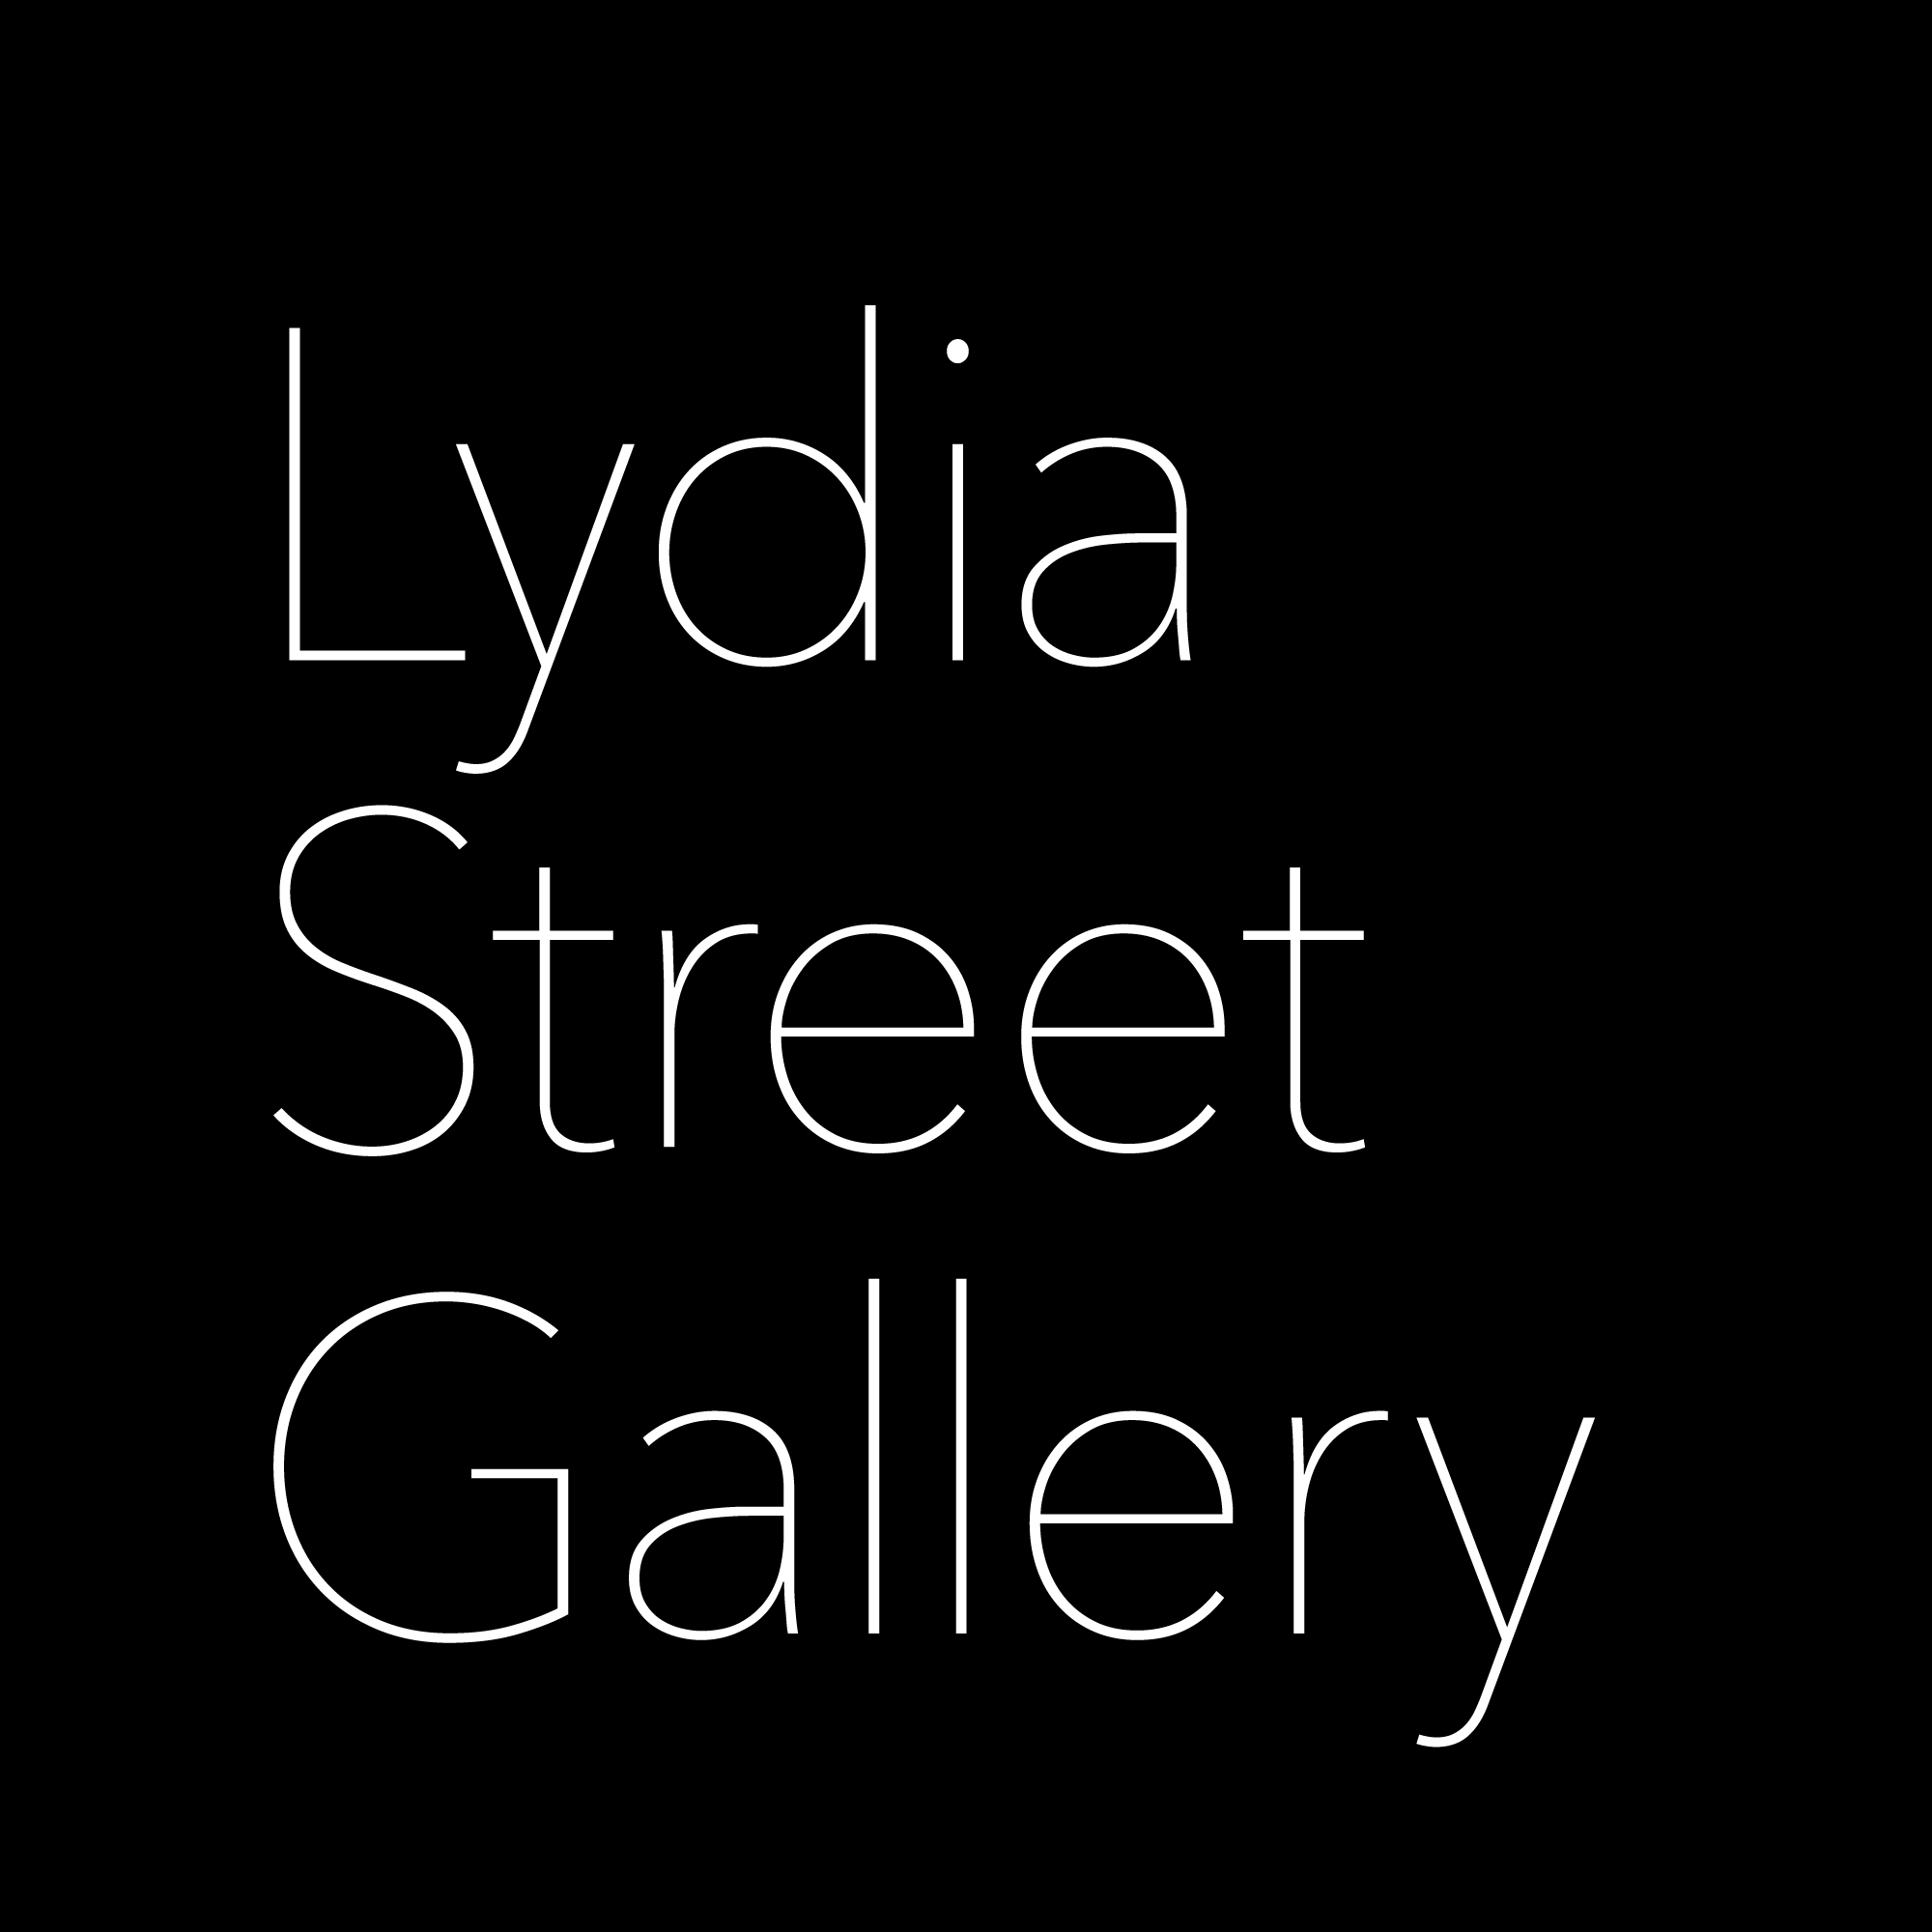 Lydia Street Gallery